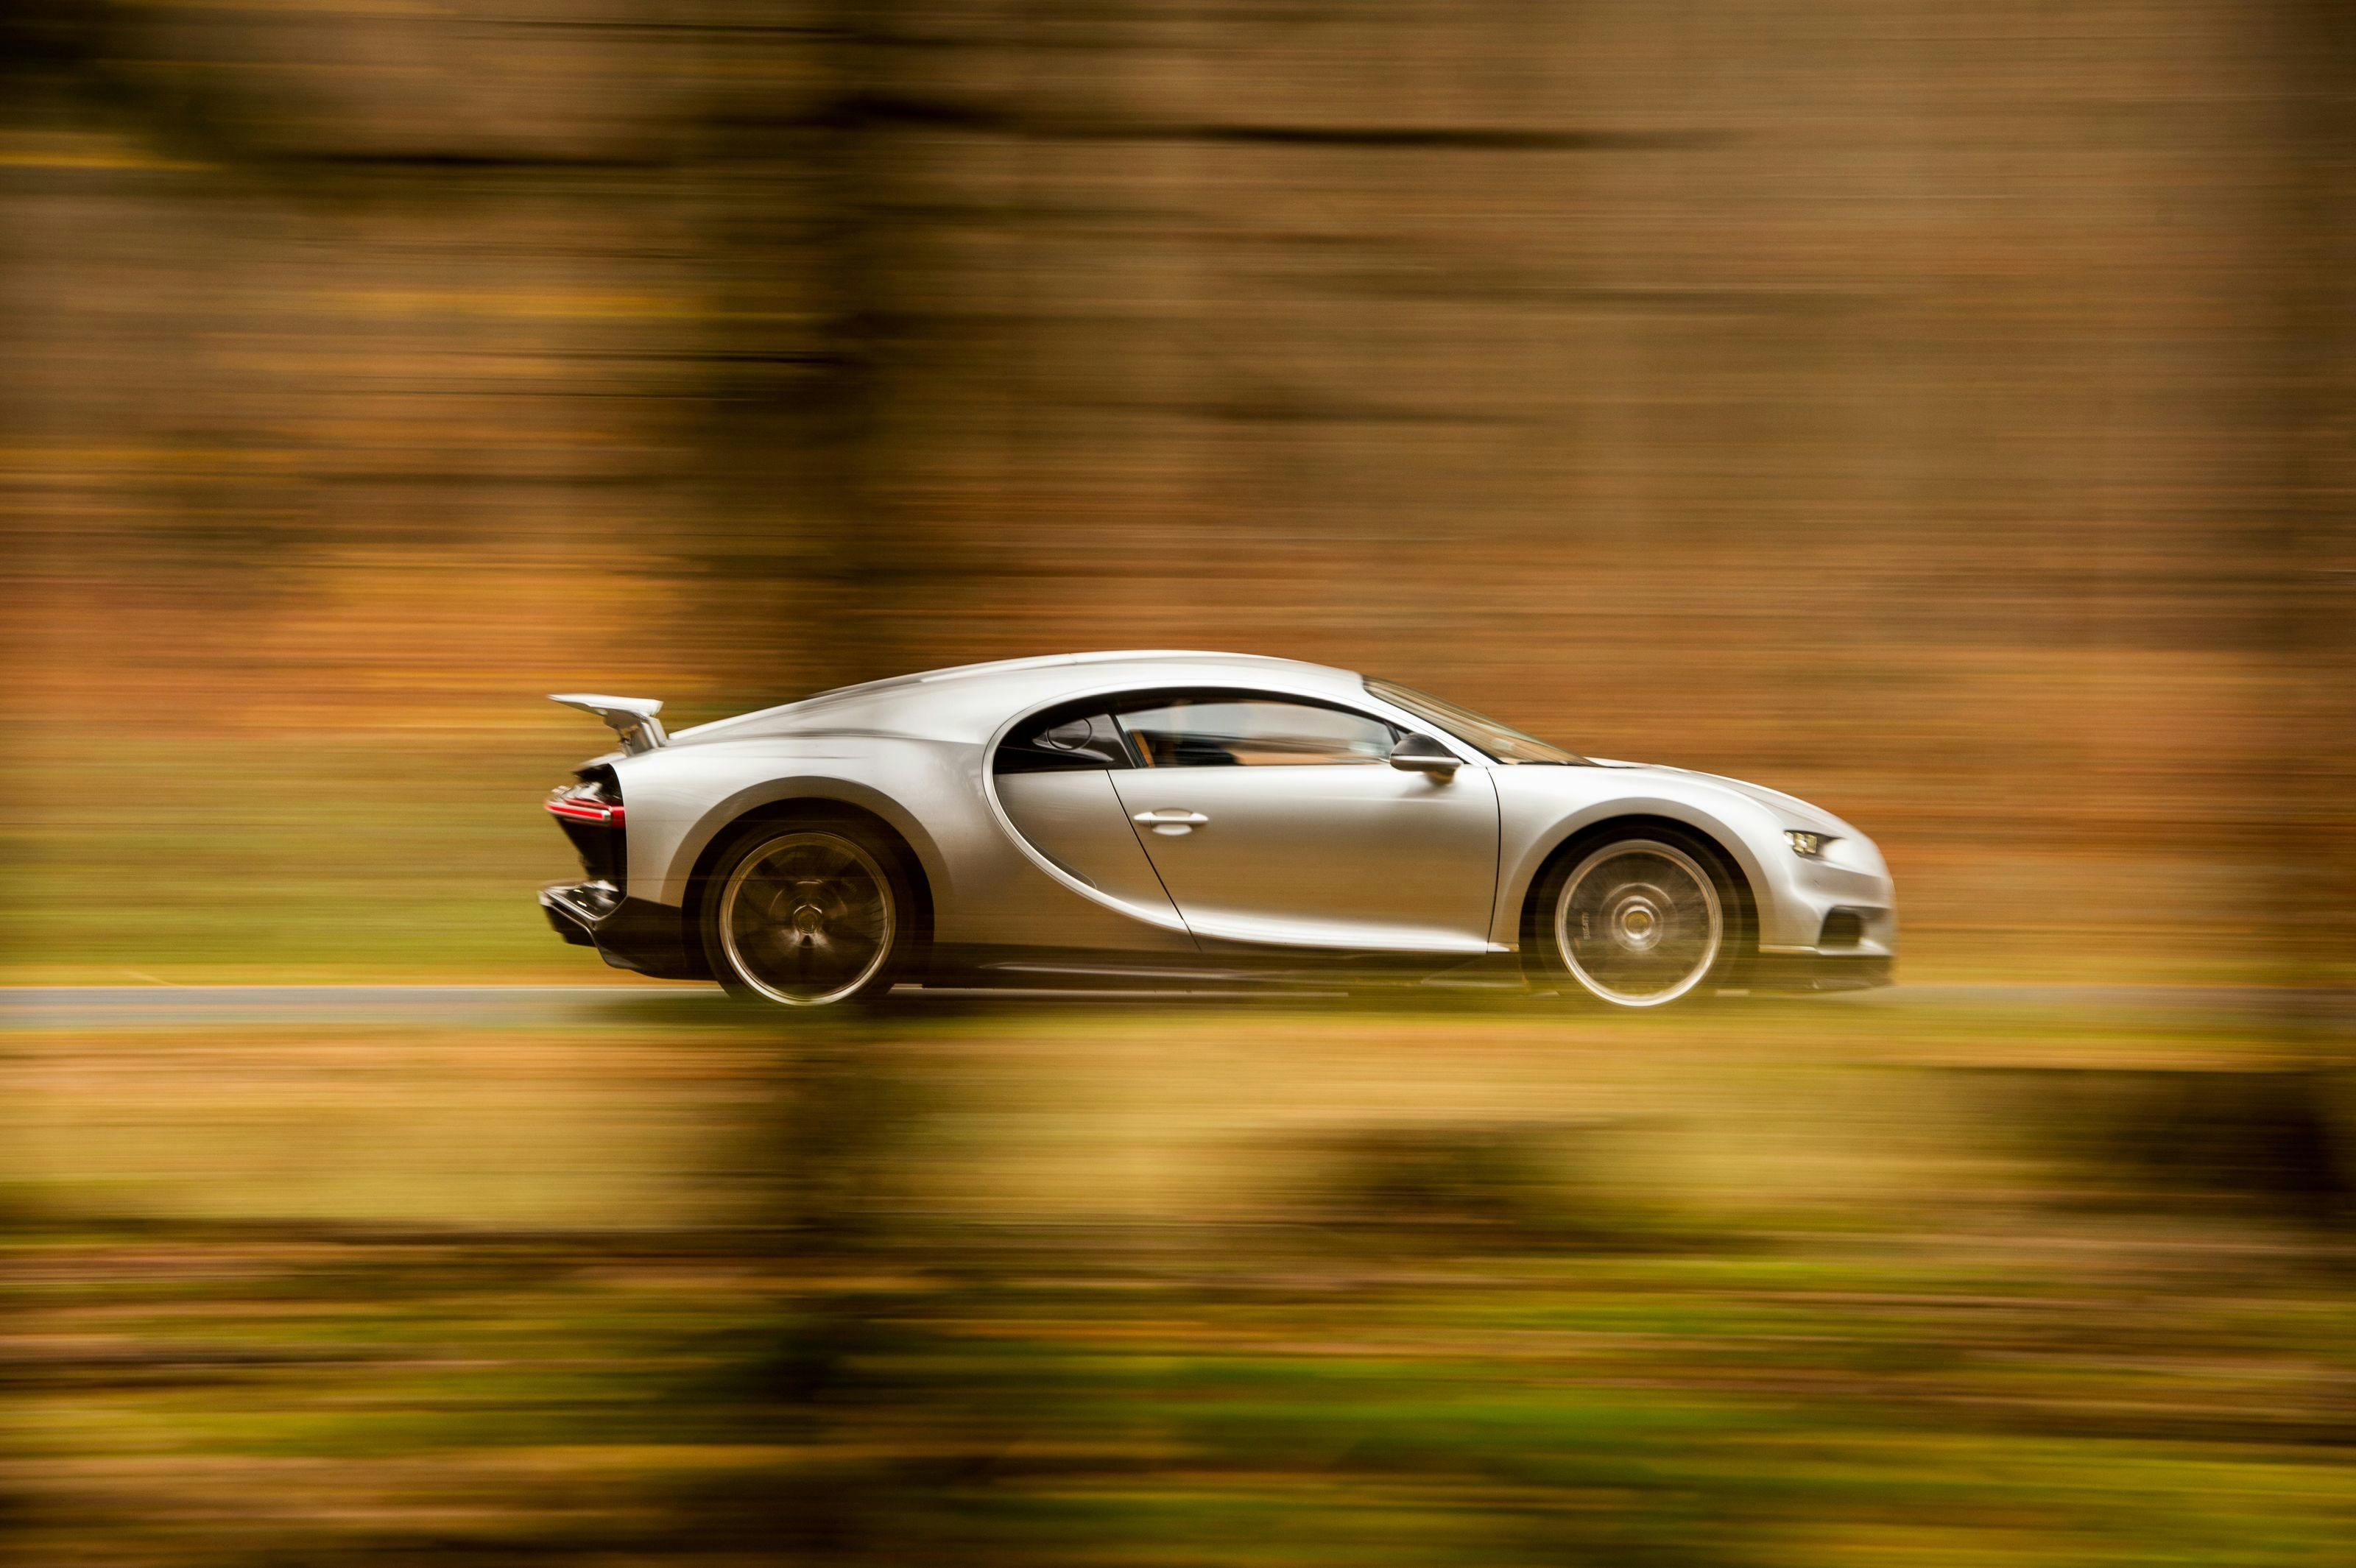 evo Magazine UK chooses Bugatti Chiron as Hypercar of the Year